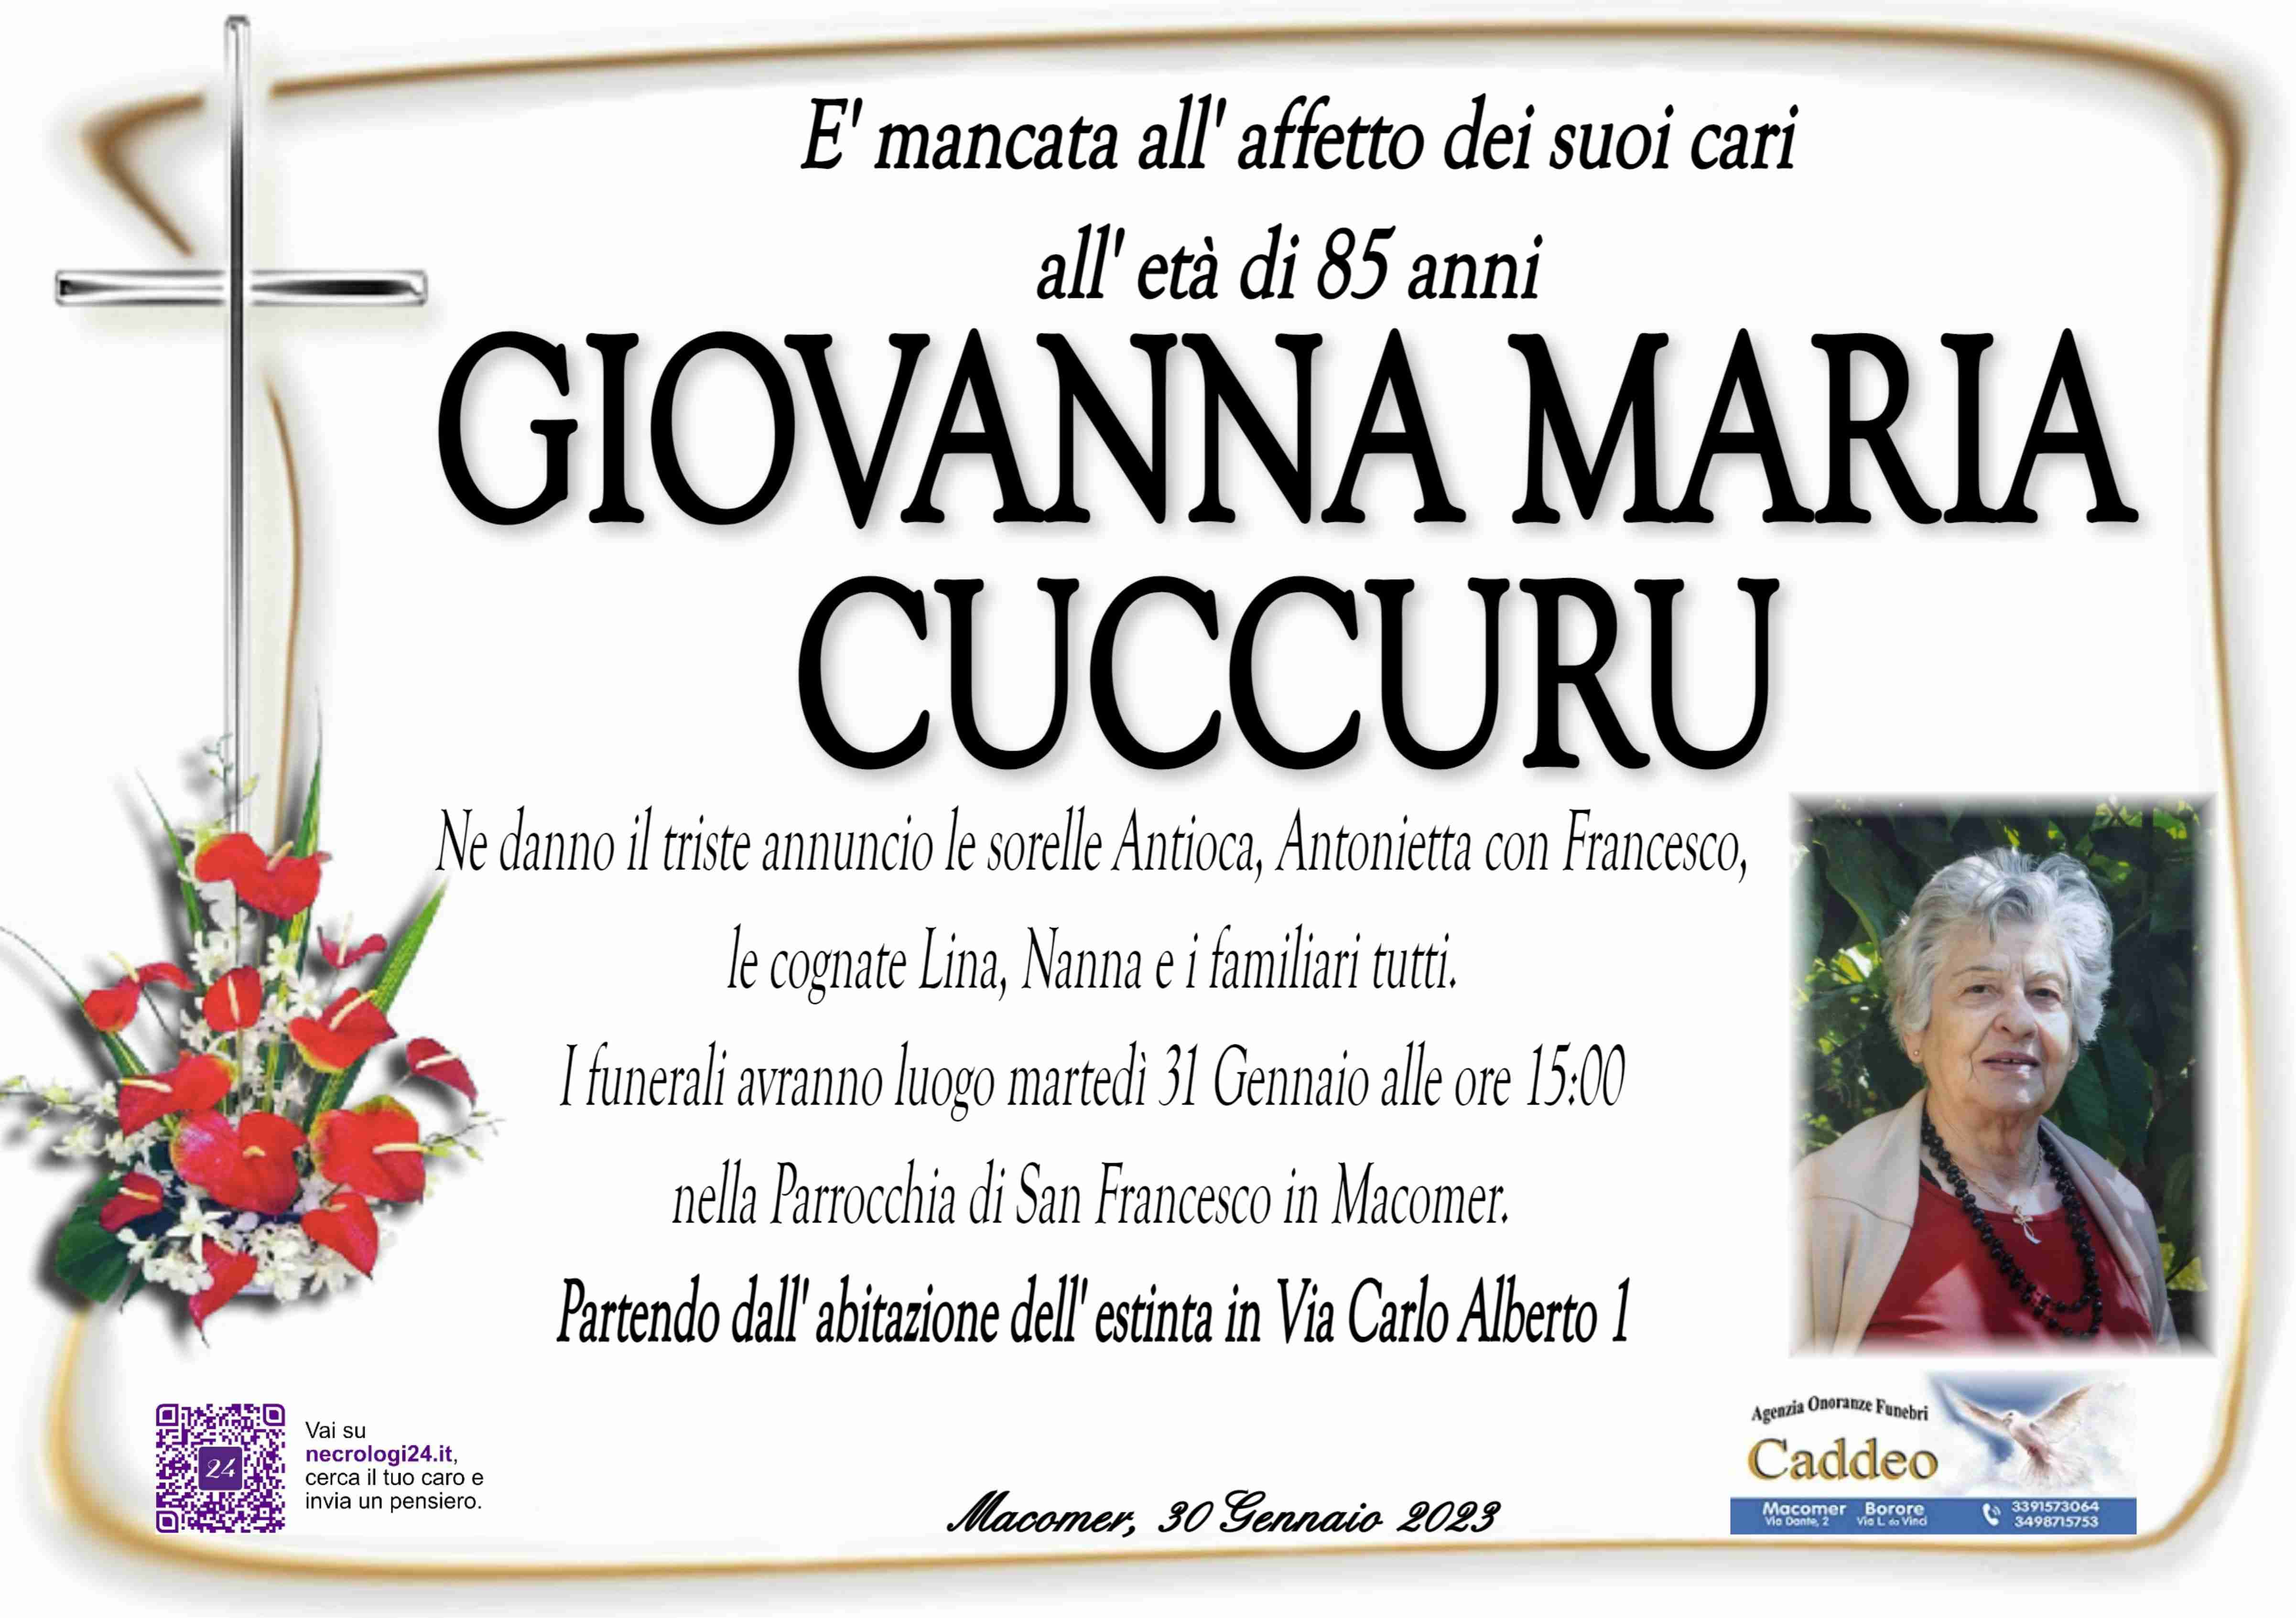 Giovanna Maria Cuccuru